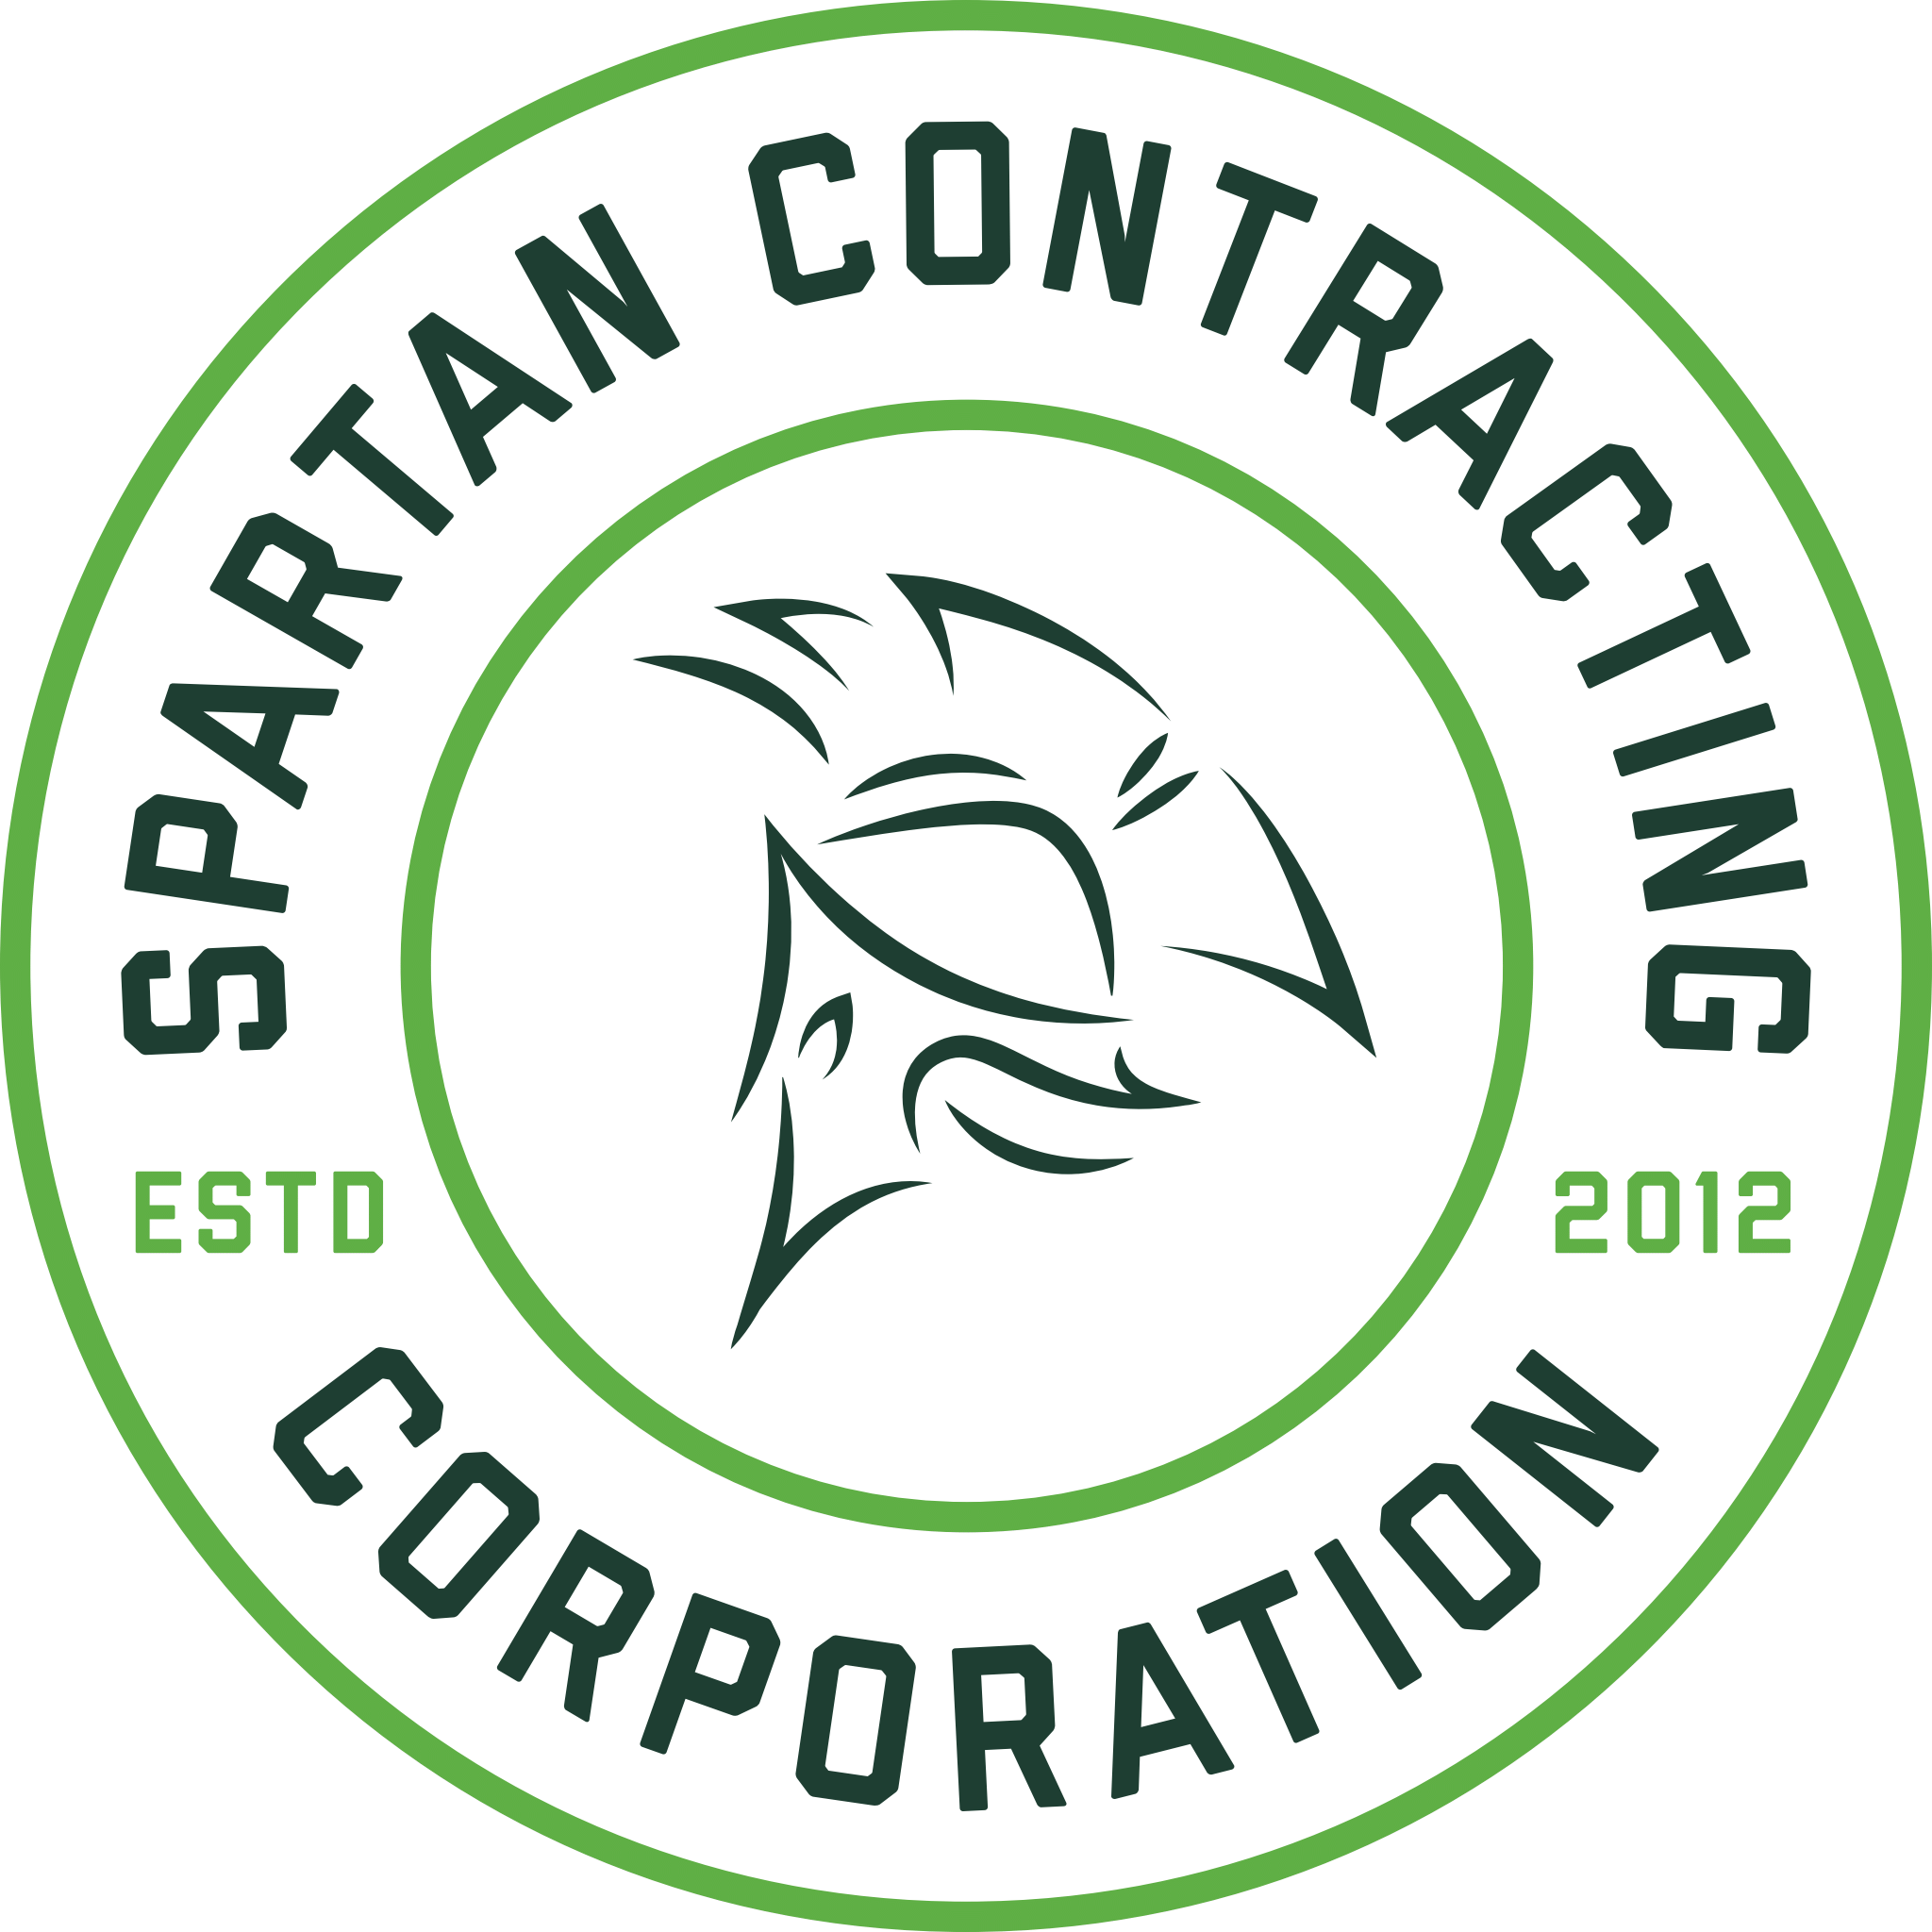 Spartan Contracting Corporation